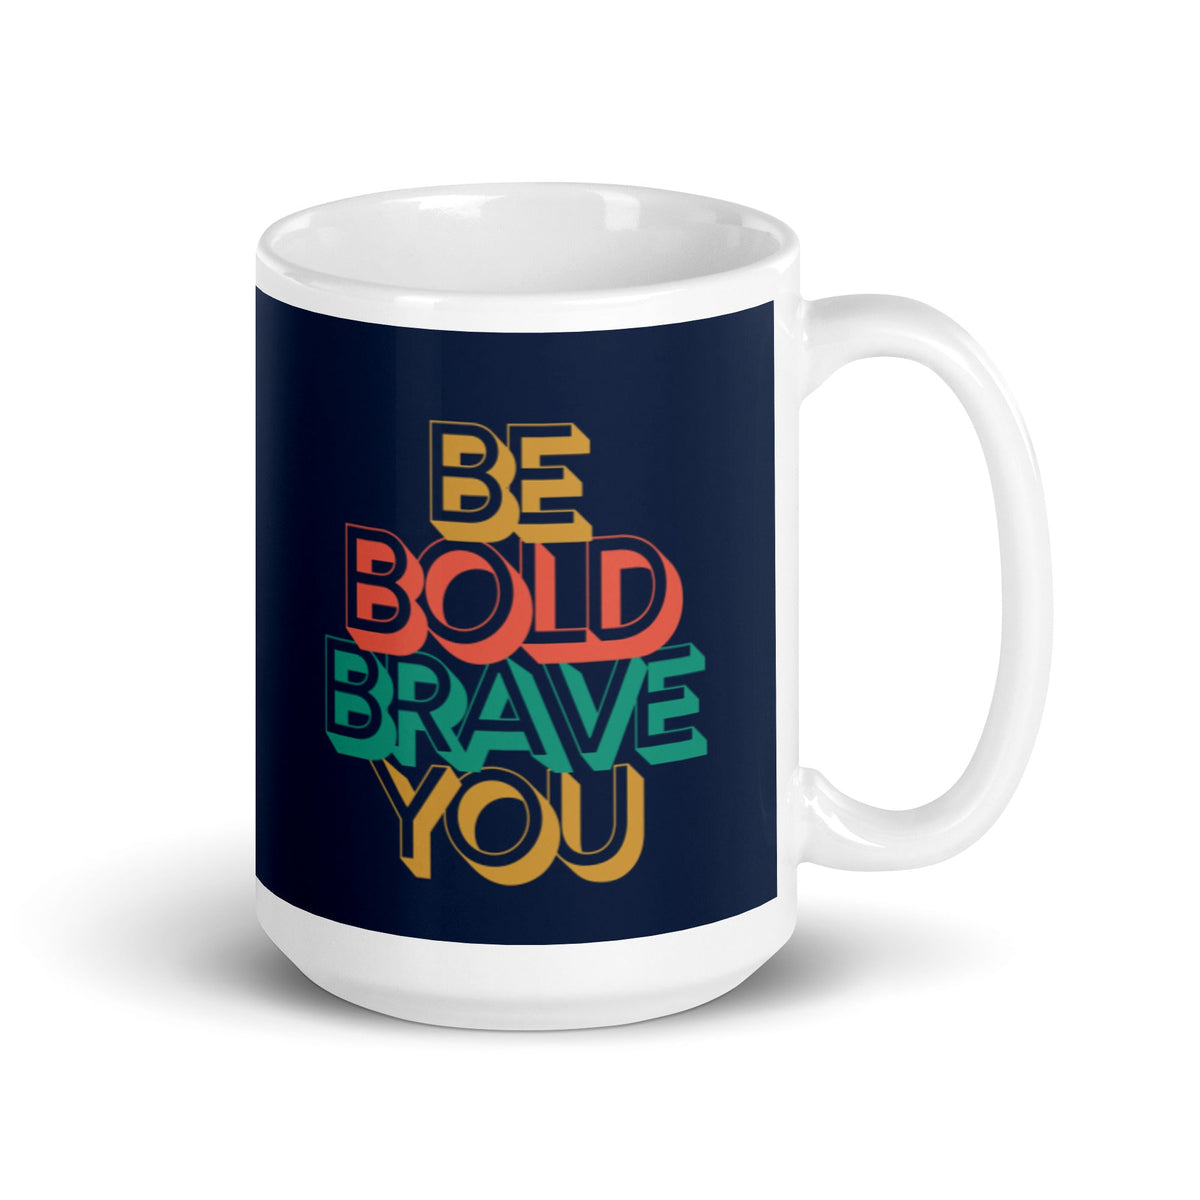 BE BOLD BRAVE YOU - Inspirational 15oz Mug - 0